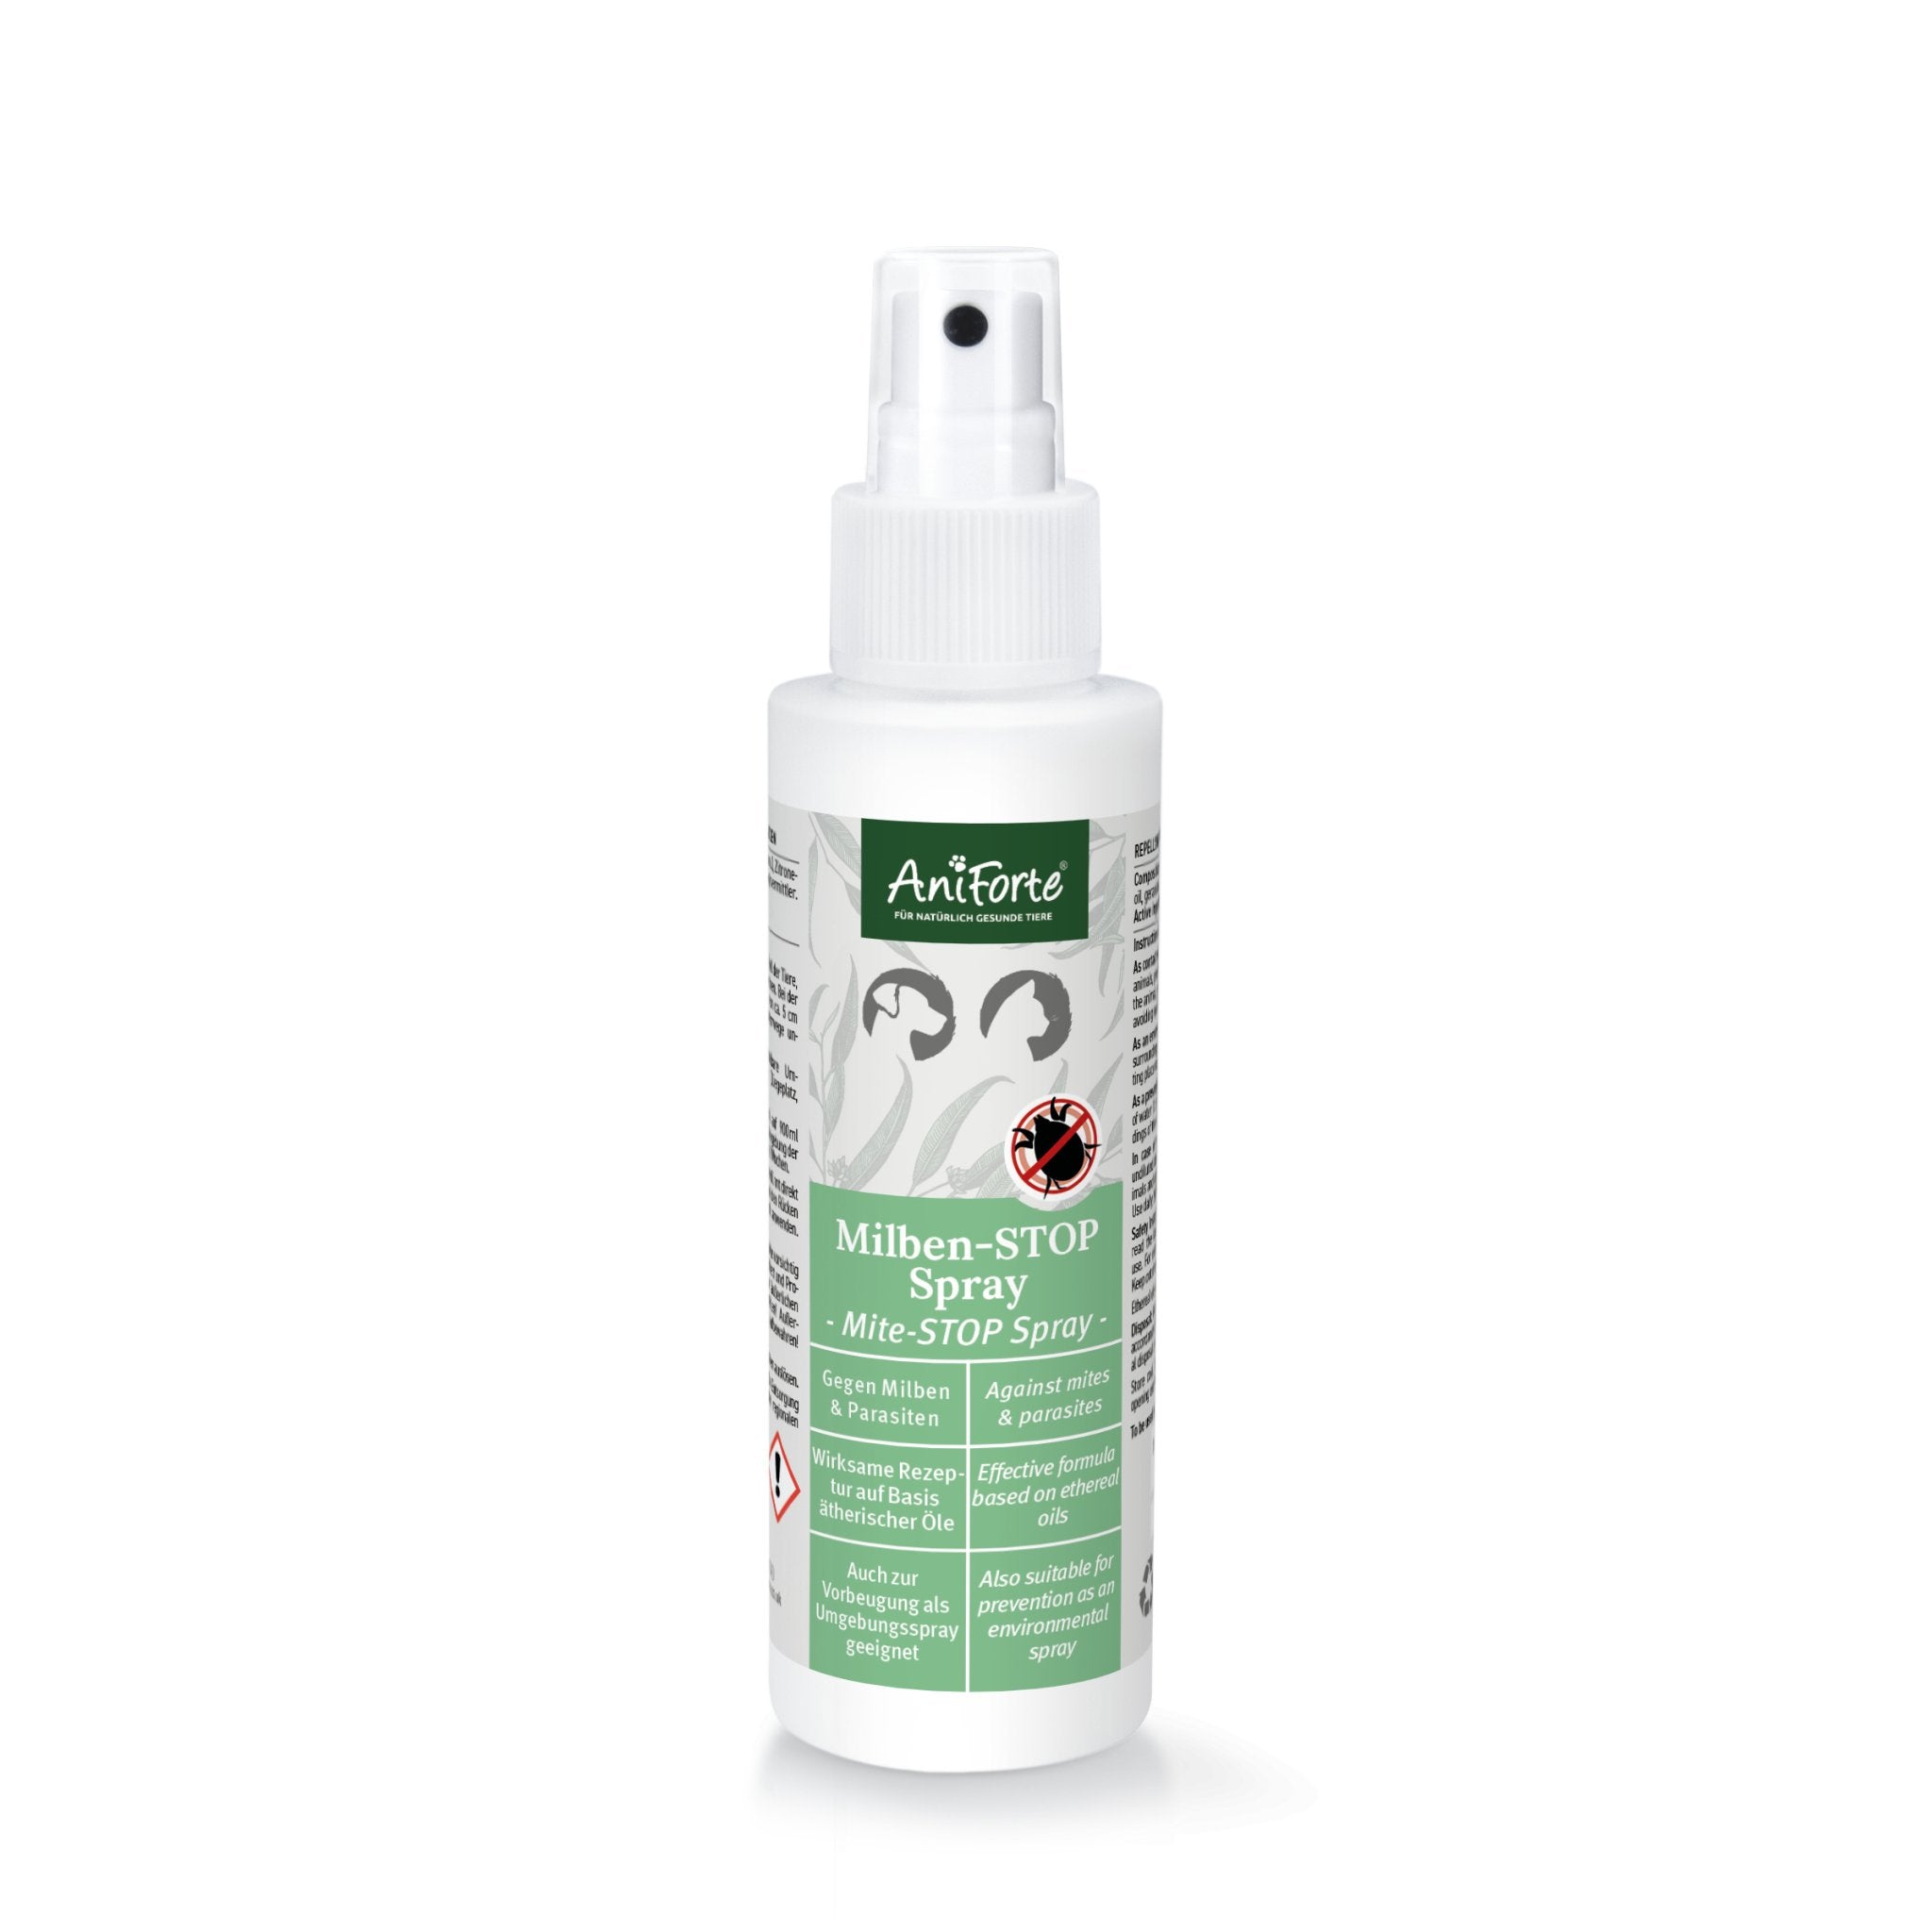 Mite-STOP Spray - Natural Mite Repellent - AniForte UK